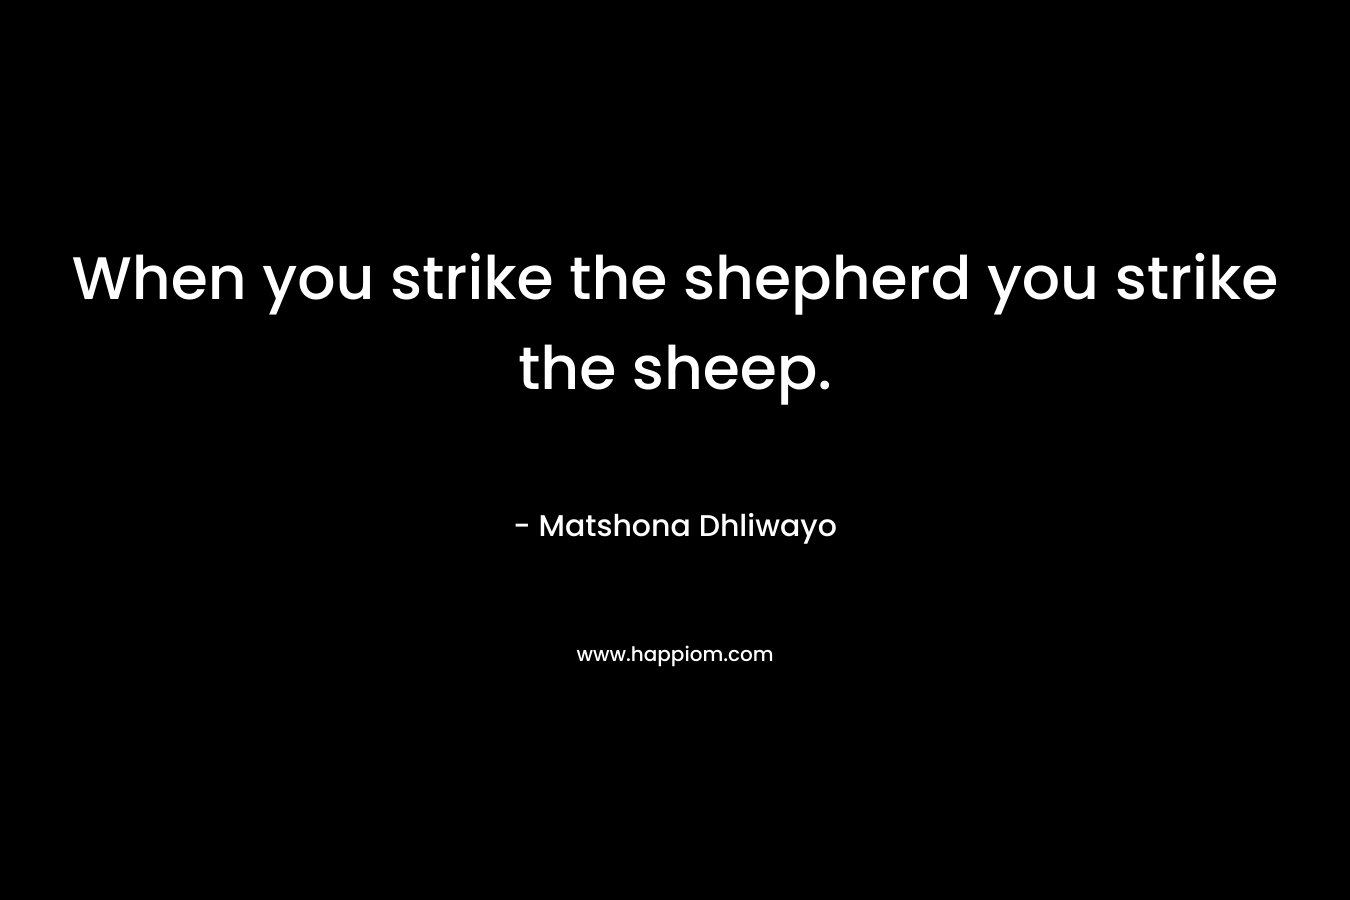 When you strike the shepherd you strike the sheep.